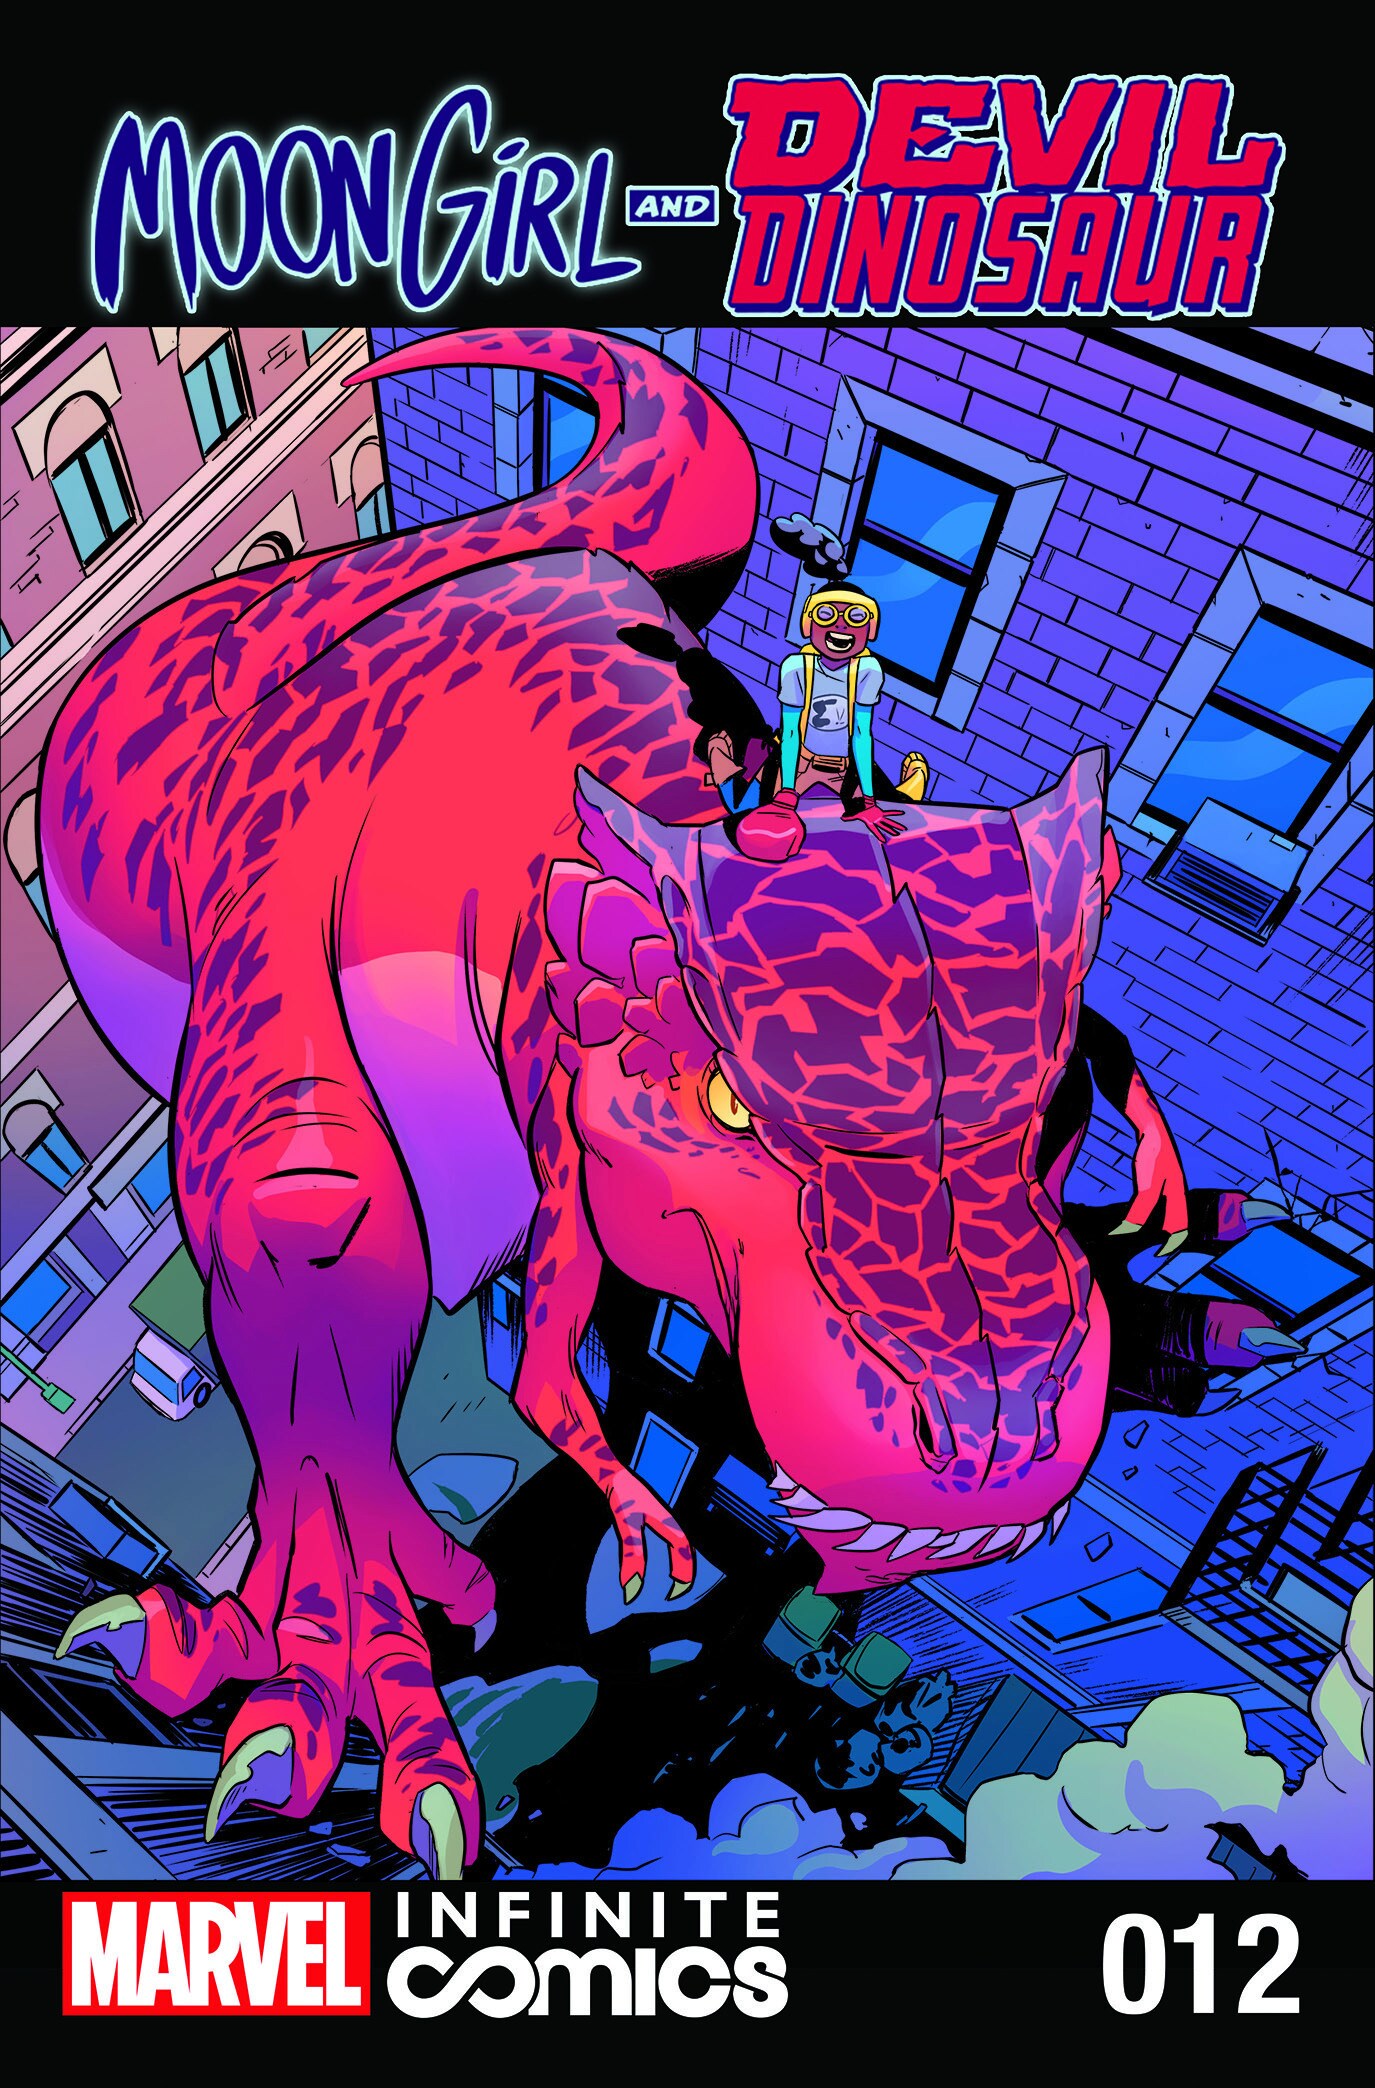 Moon Girl and Devil Dinosaur #12